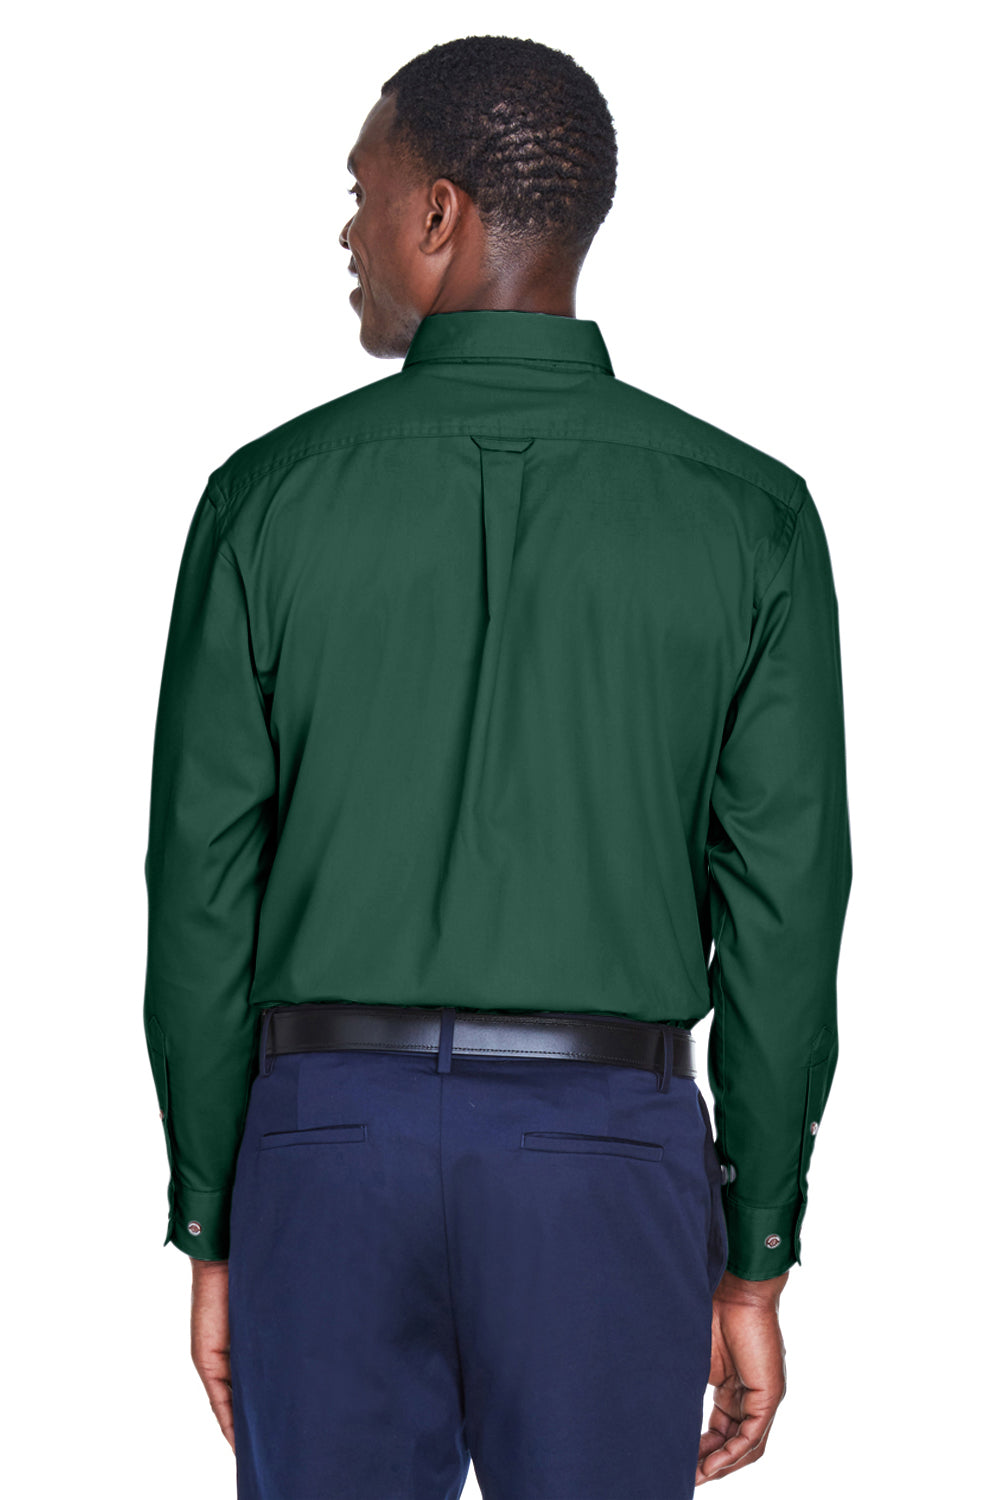 Harriton M500 Mens Wrinkle Resistant Long Sleeve Button Down Shirt w/ Pocket Hunter Green Back